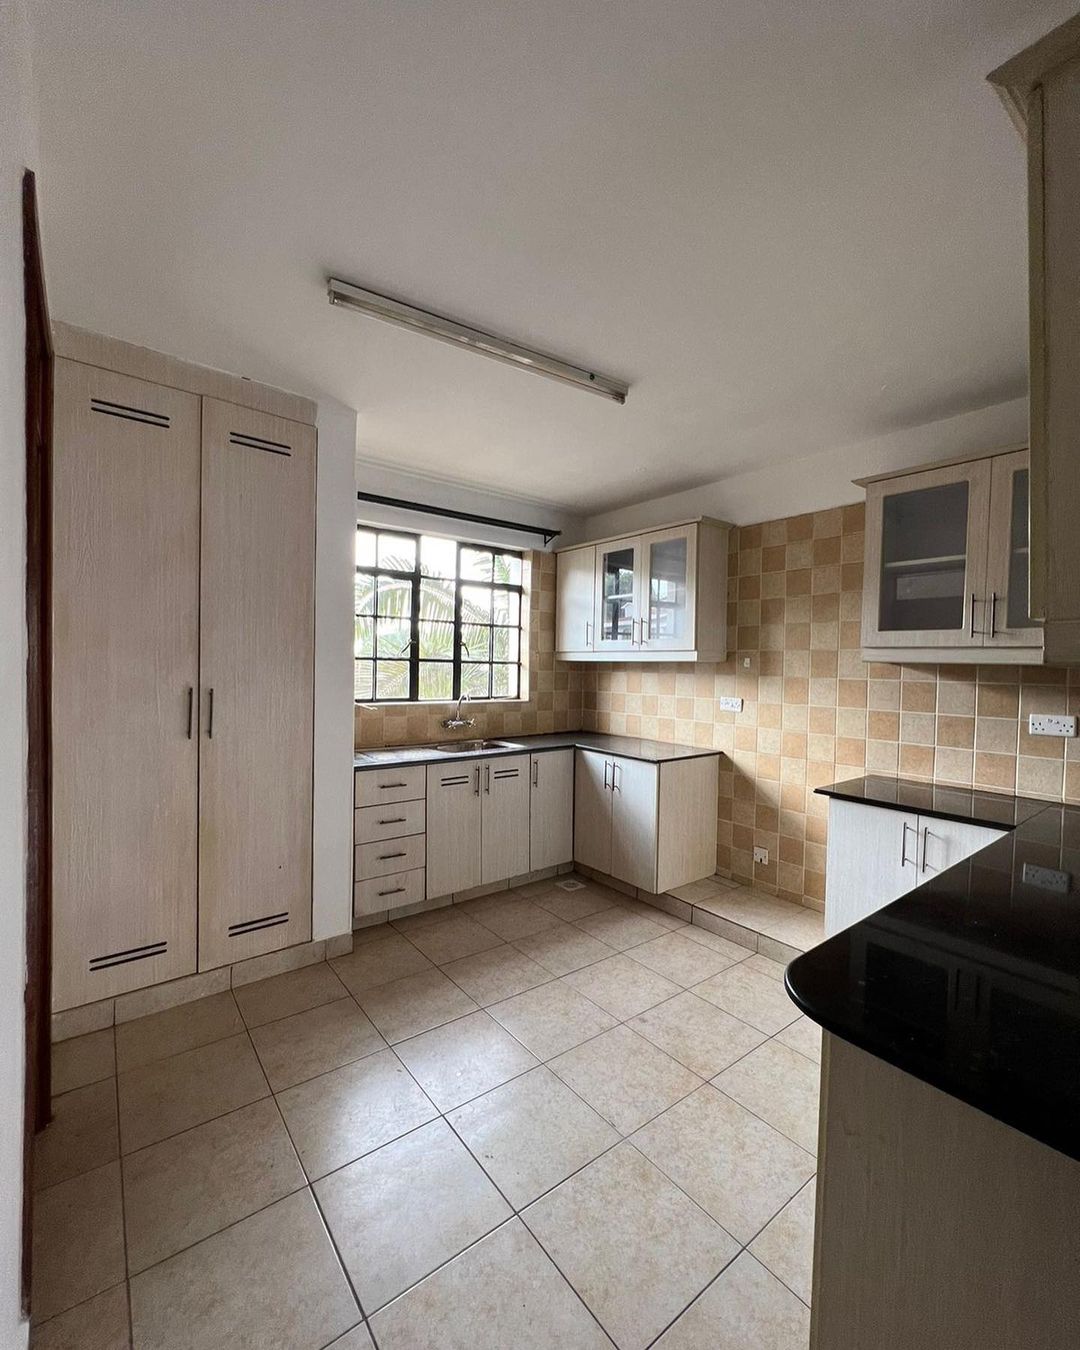 2 bedroom apartment for rent in Riverside, Nairobi. Musilli Homes